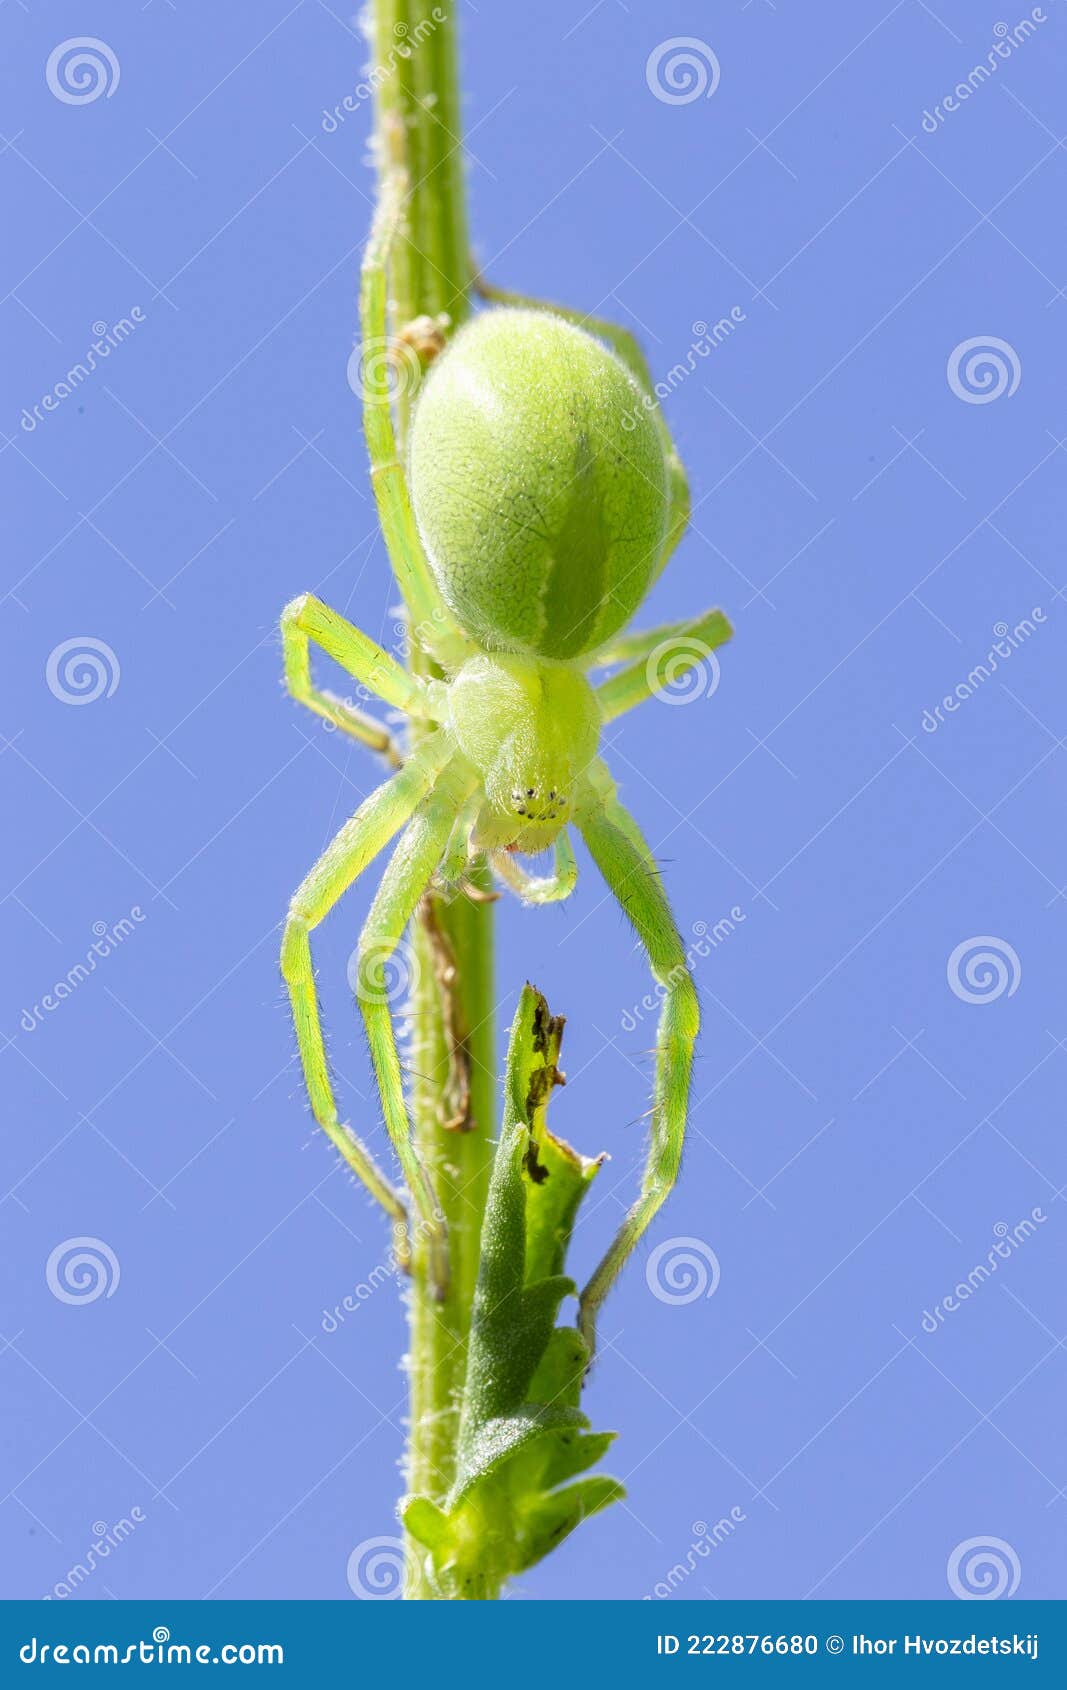 female of green huntsman spider micrommata virescens close up. micrommata virescens, common name green huntsman spider, is a spe